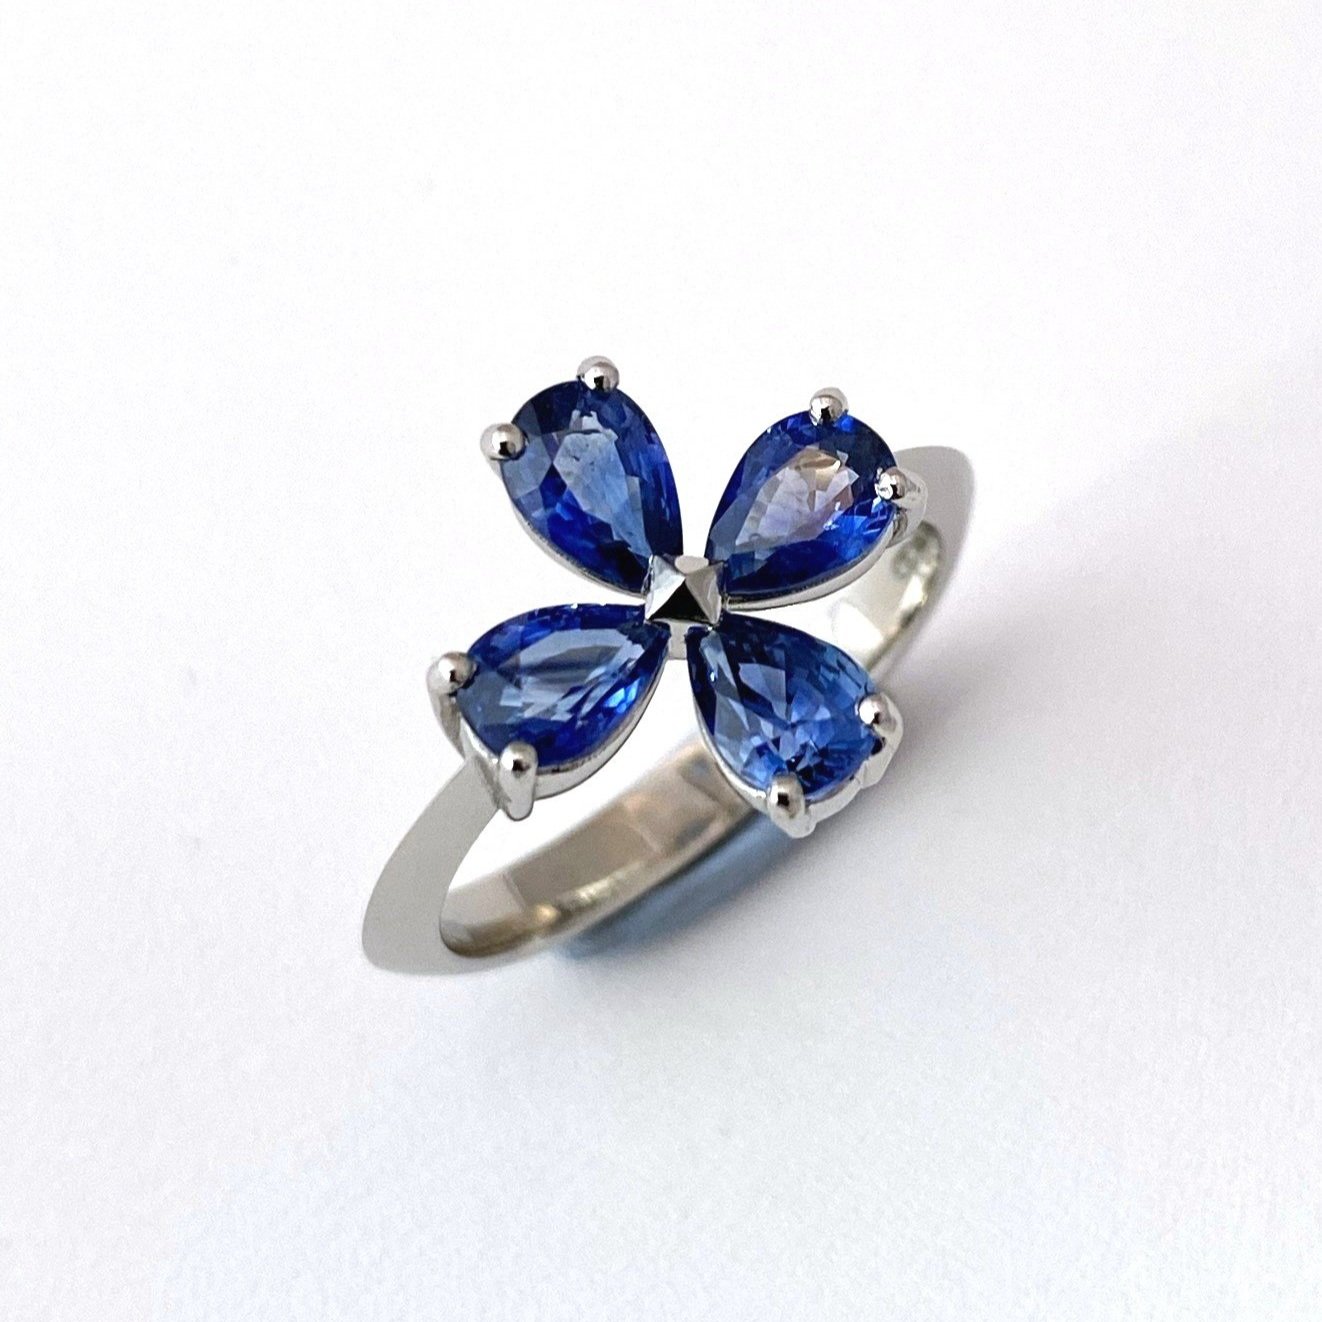 Bespoke Sapphire Petals ring